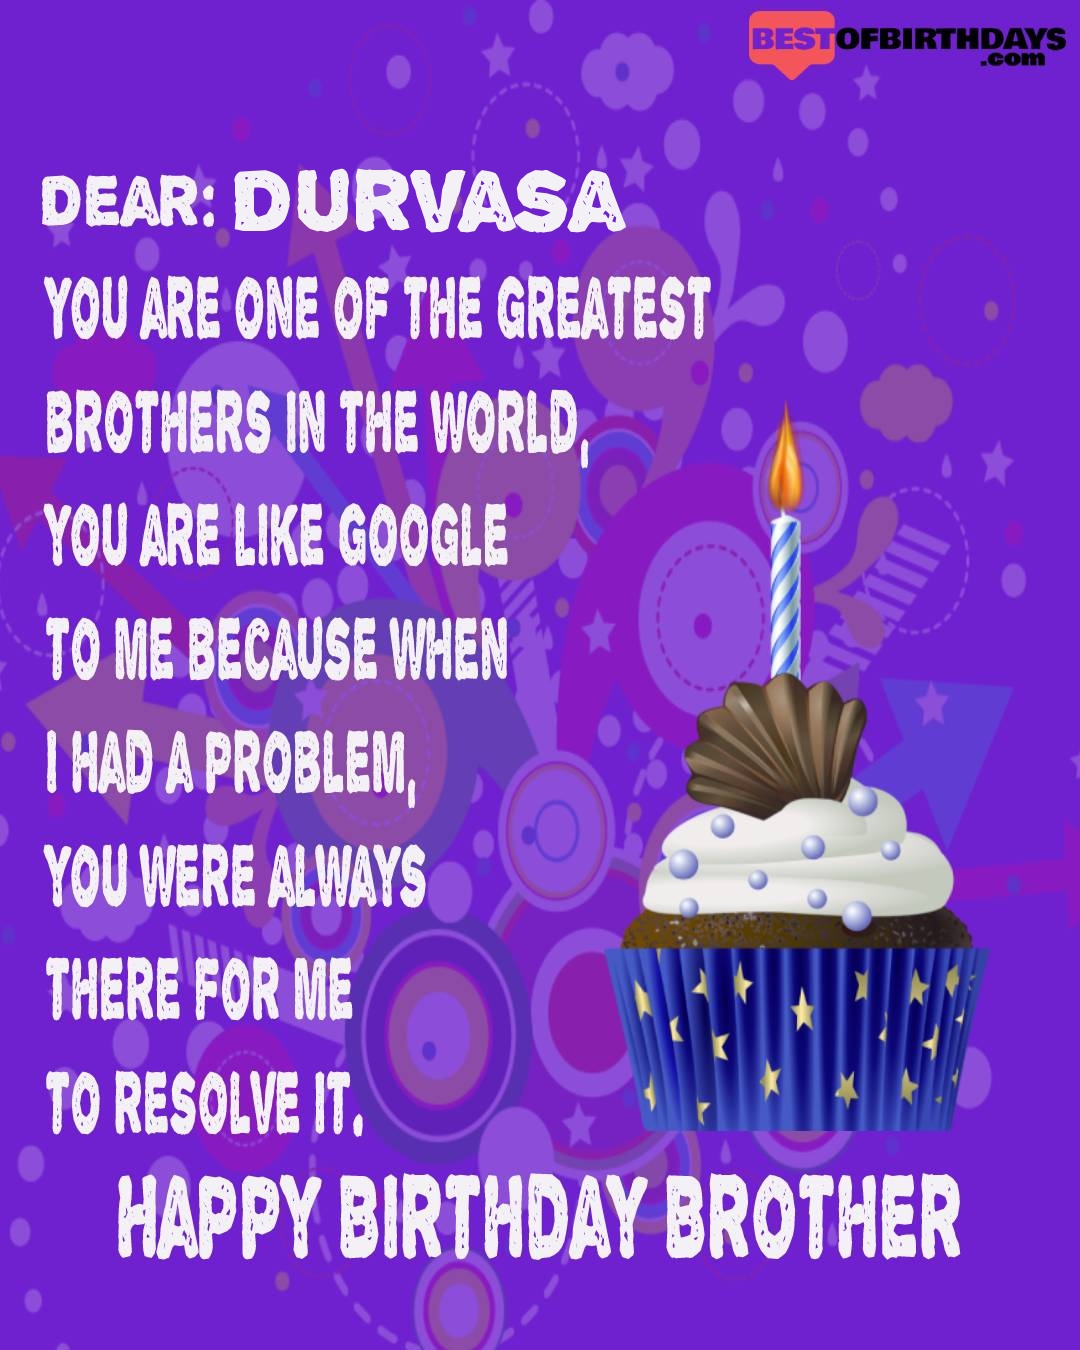 Happy birthday durvasa bhai brother bro